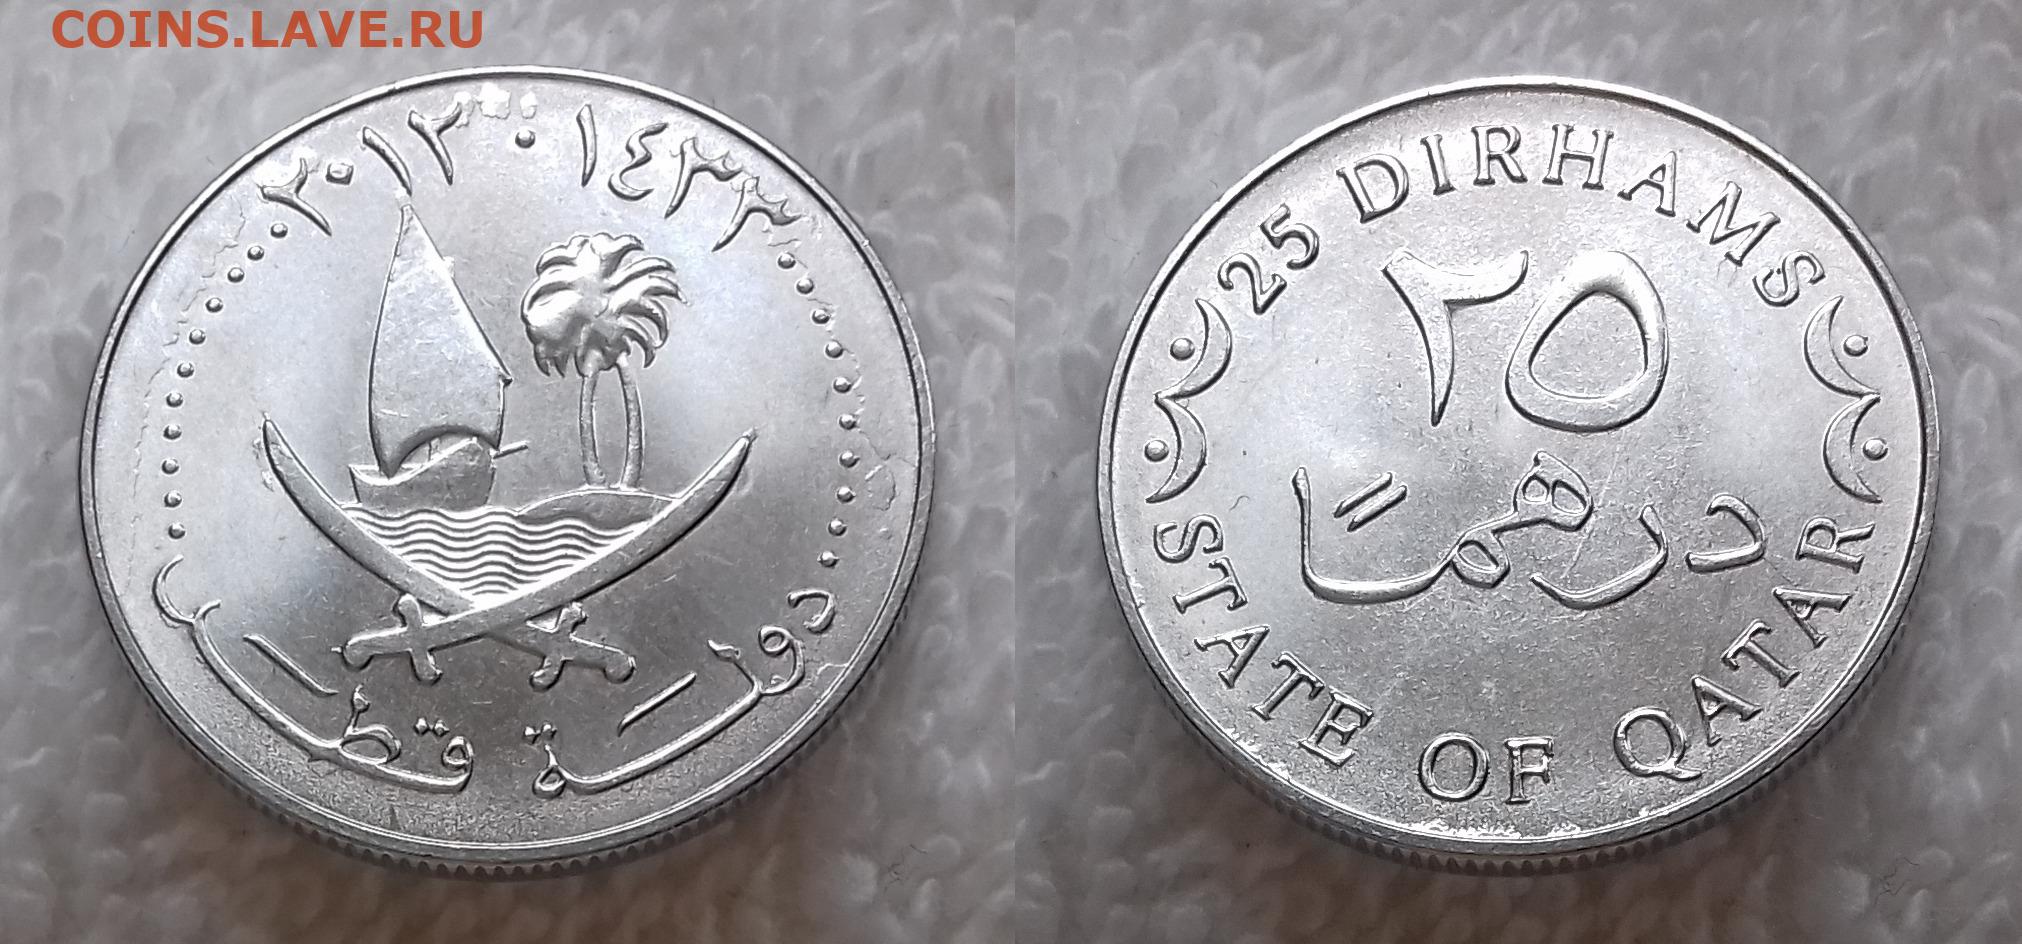 95 дирхам. 25 Дирхамов. Дирхама монета 25. ОАЭ 1 дирхам 1986. Монета Катар 2 дирхама.